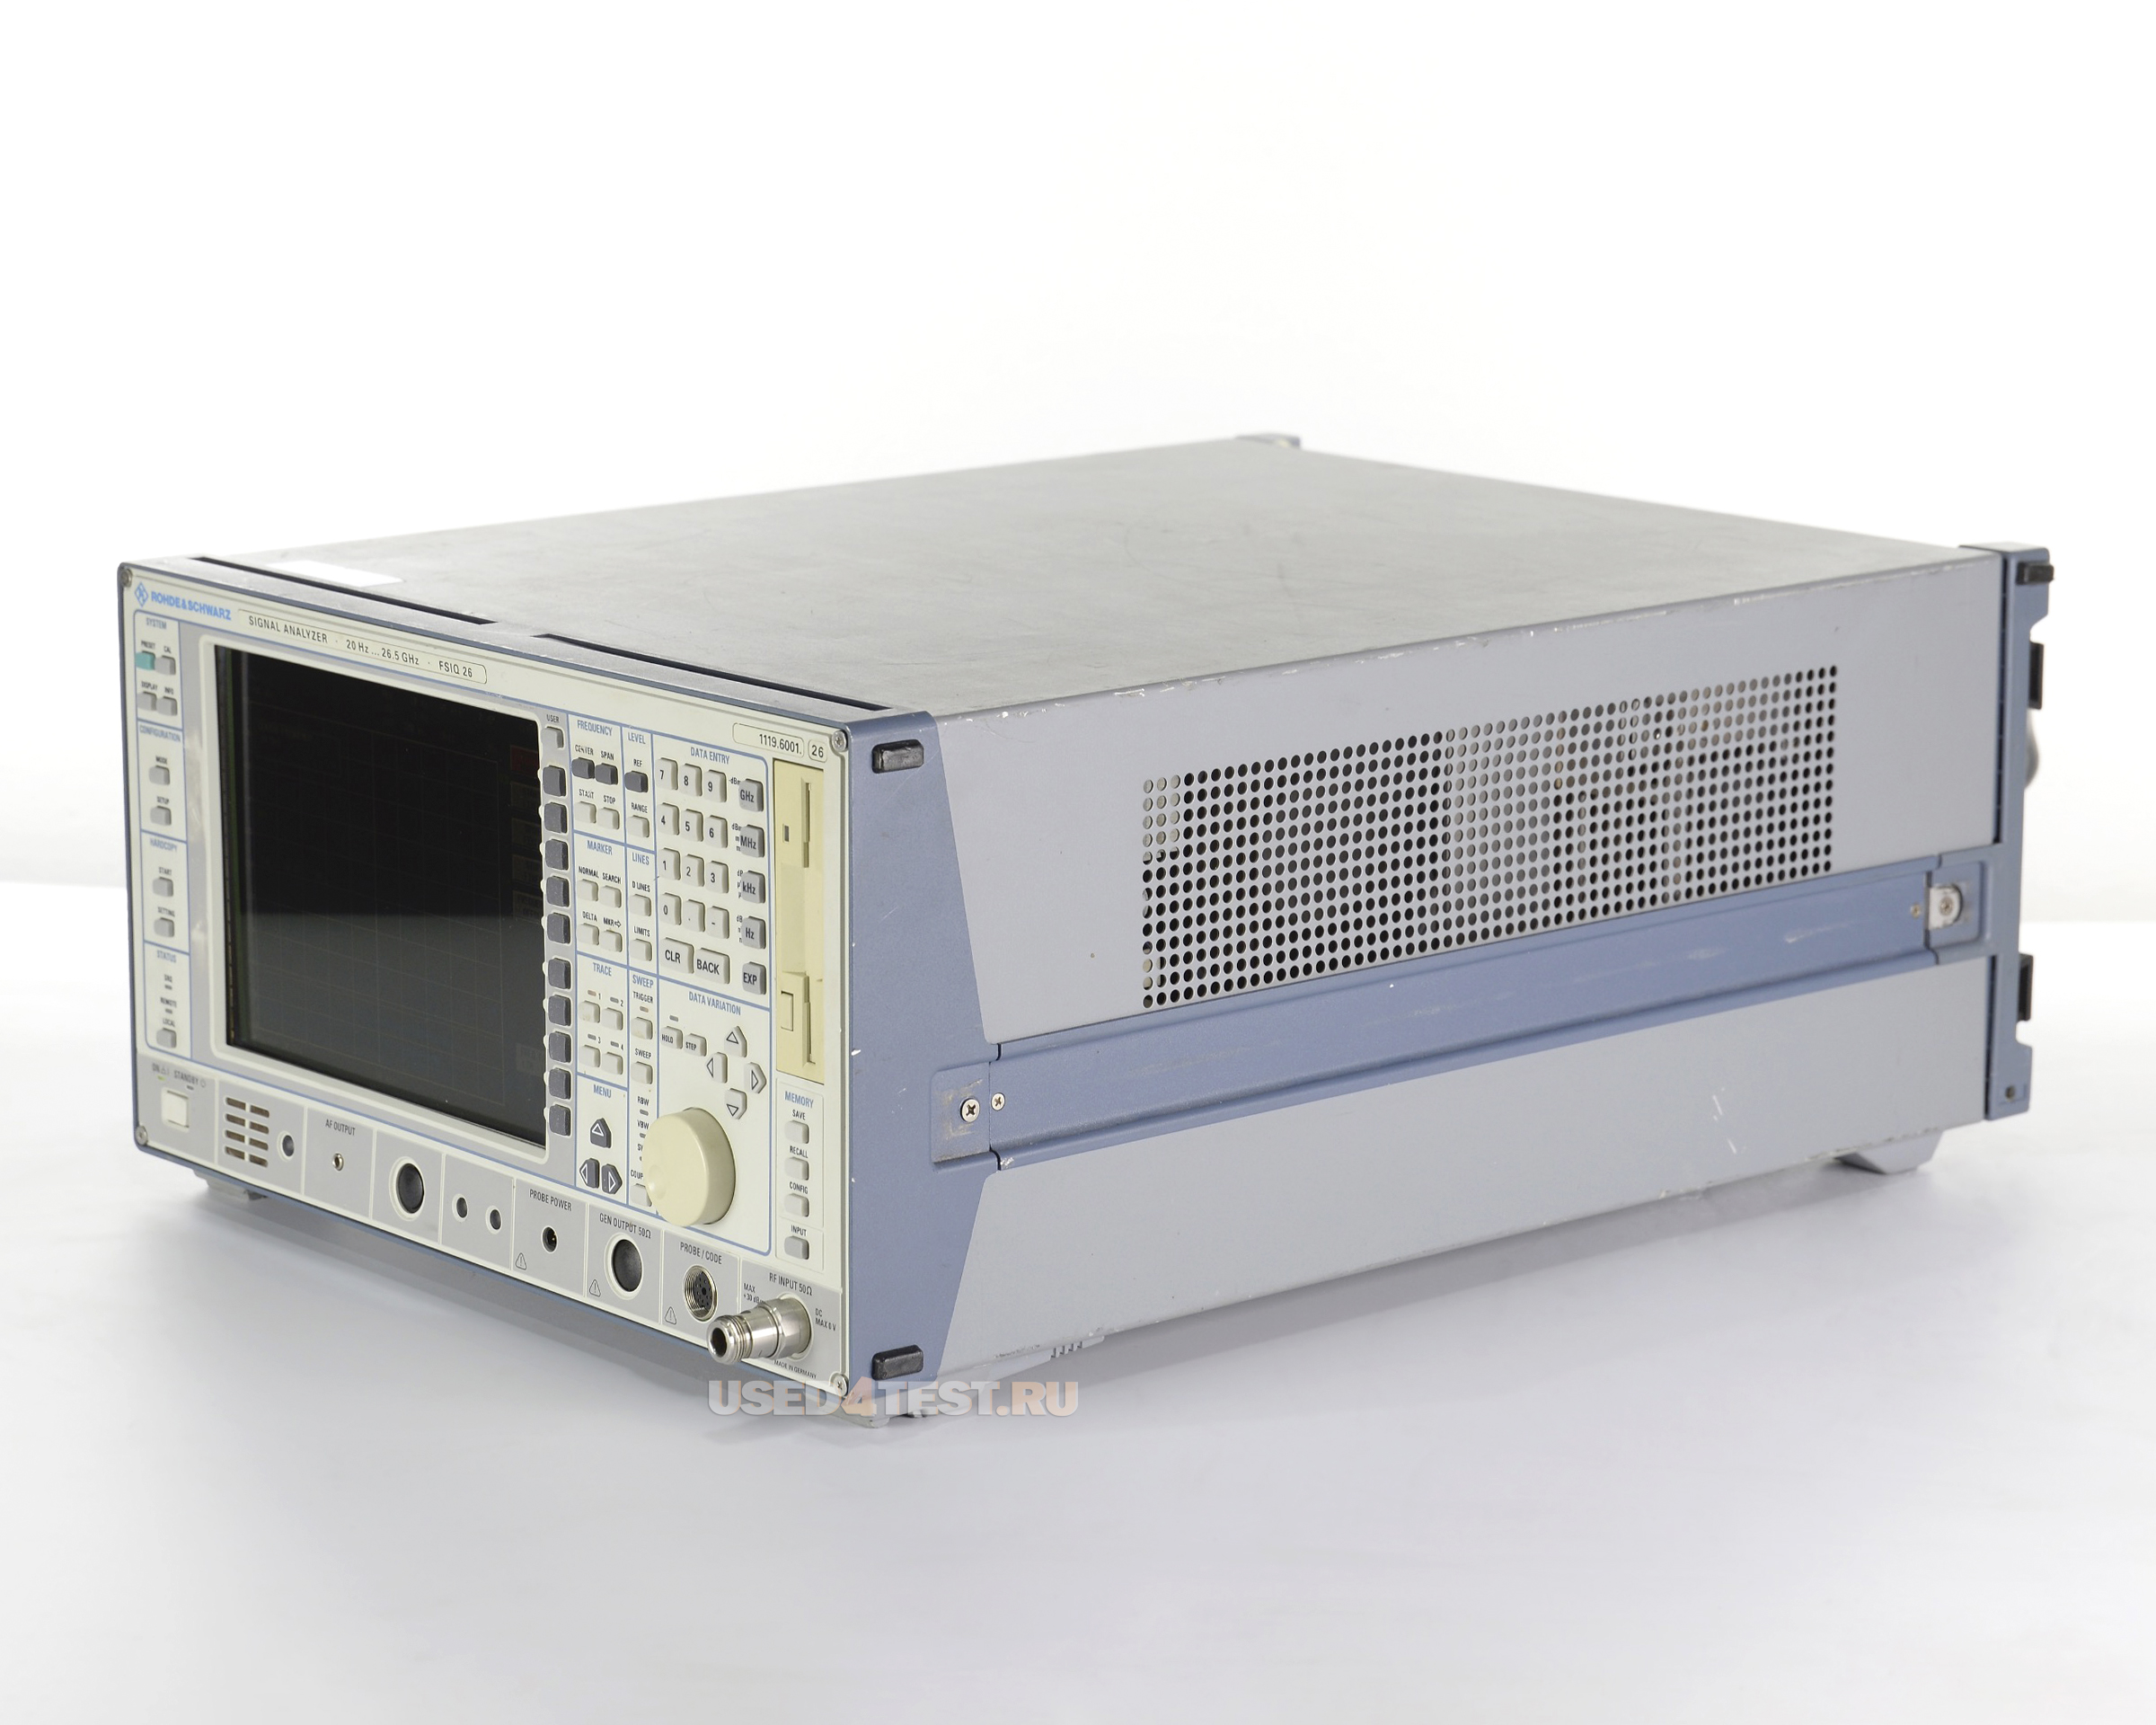 Анализатор спектра Rohde & Schwarz FSIQ 26
 с диапазоном частот от 20 Гц до 27 ГГц
 

 В комплекте с опциями: 


	R&S FSE-B4 - Low Phase Noise
	R&S FSE-B5 - FFT-Bandwidth 1Hz - 1 kHz
	R&S FSE-B7 - Vector Signal Analysis
	R&S FSE-B16 - Ethernet Interface, 15-contact AUI connector


 Стоимость указана в Рублях DDP Москва по безналичному расчету включая НДС 20%
